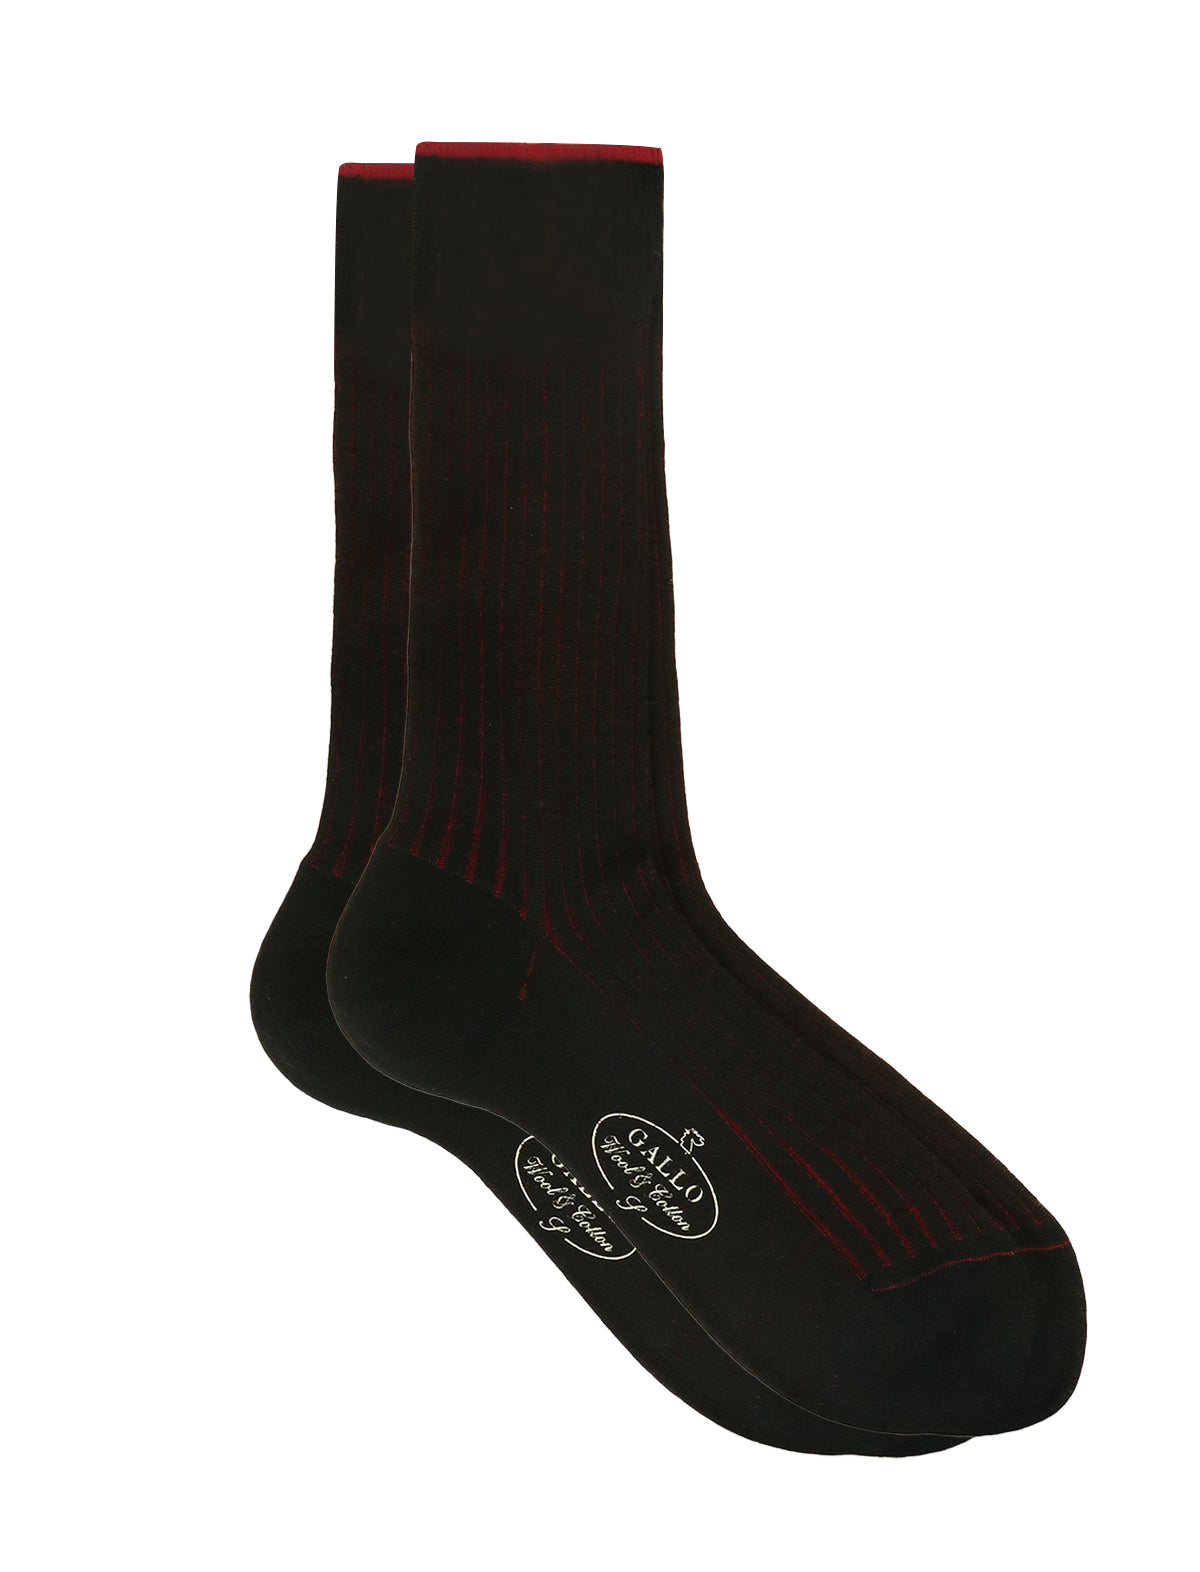 Gallo Socks in Black w/ Red Pinstripes